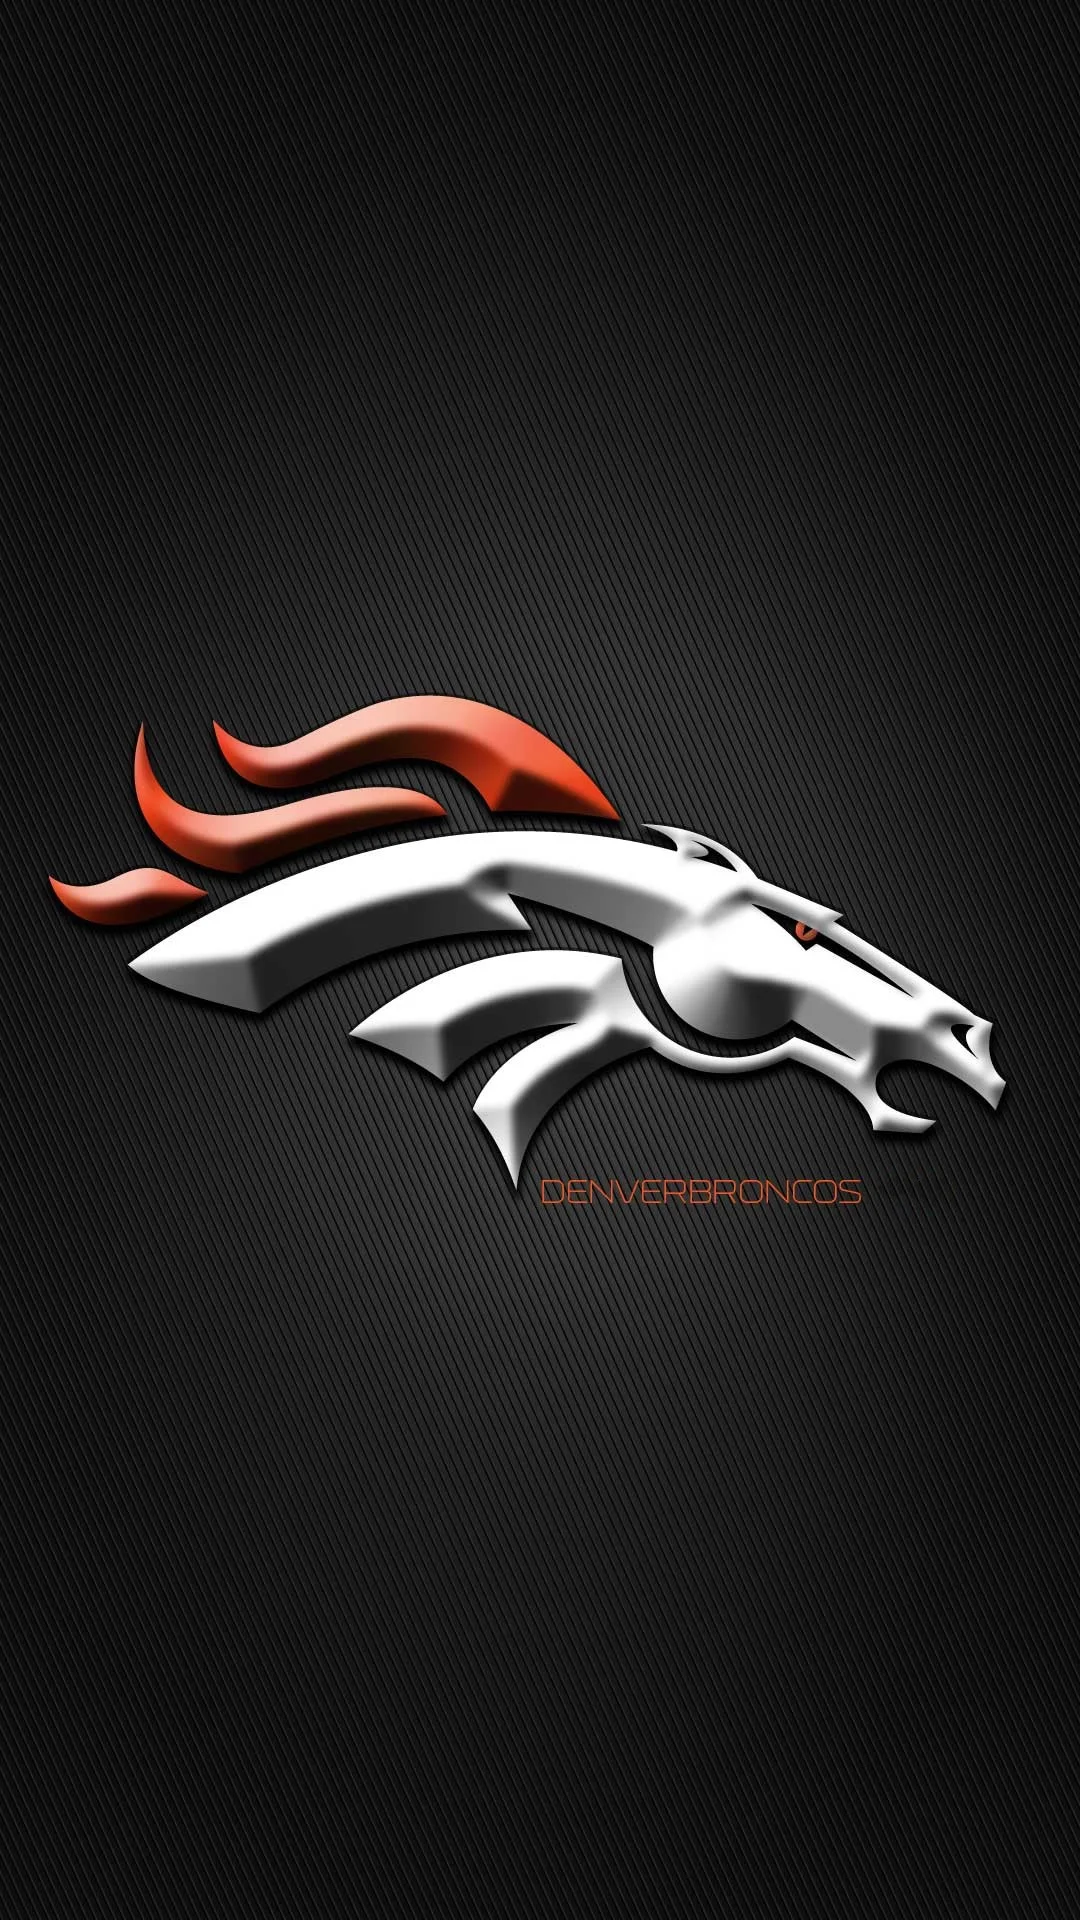 Denver Broncos iPhone 5 HD Wallpaper.